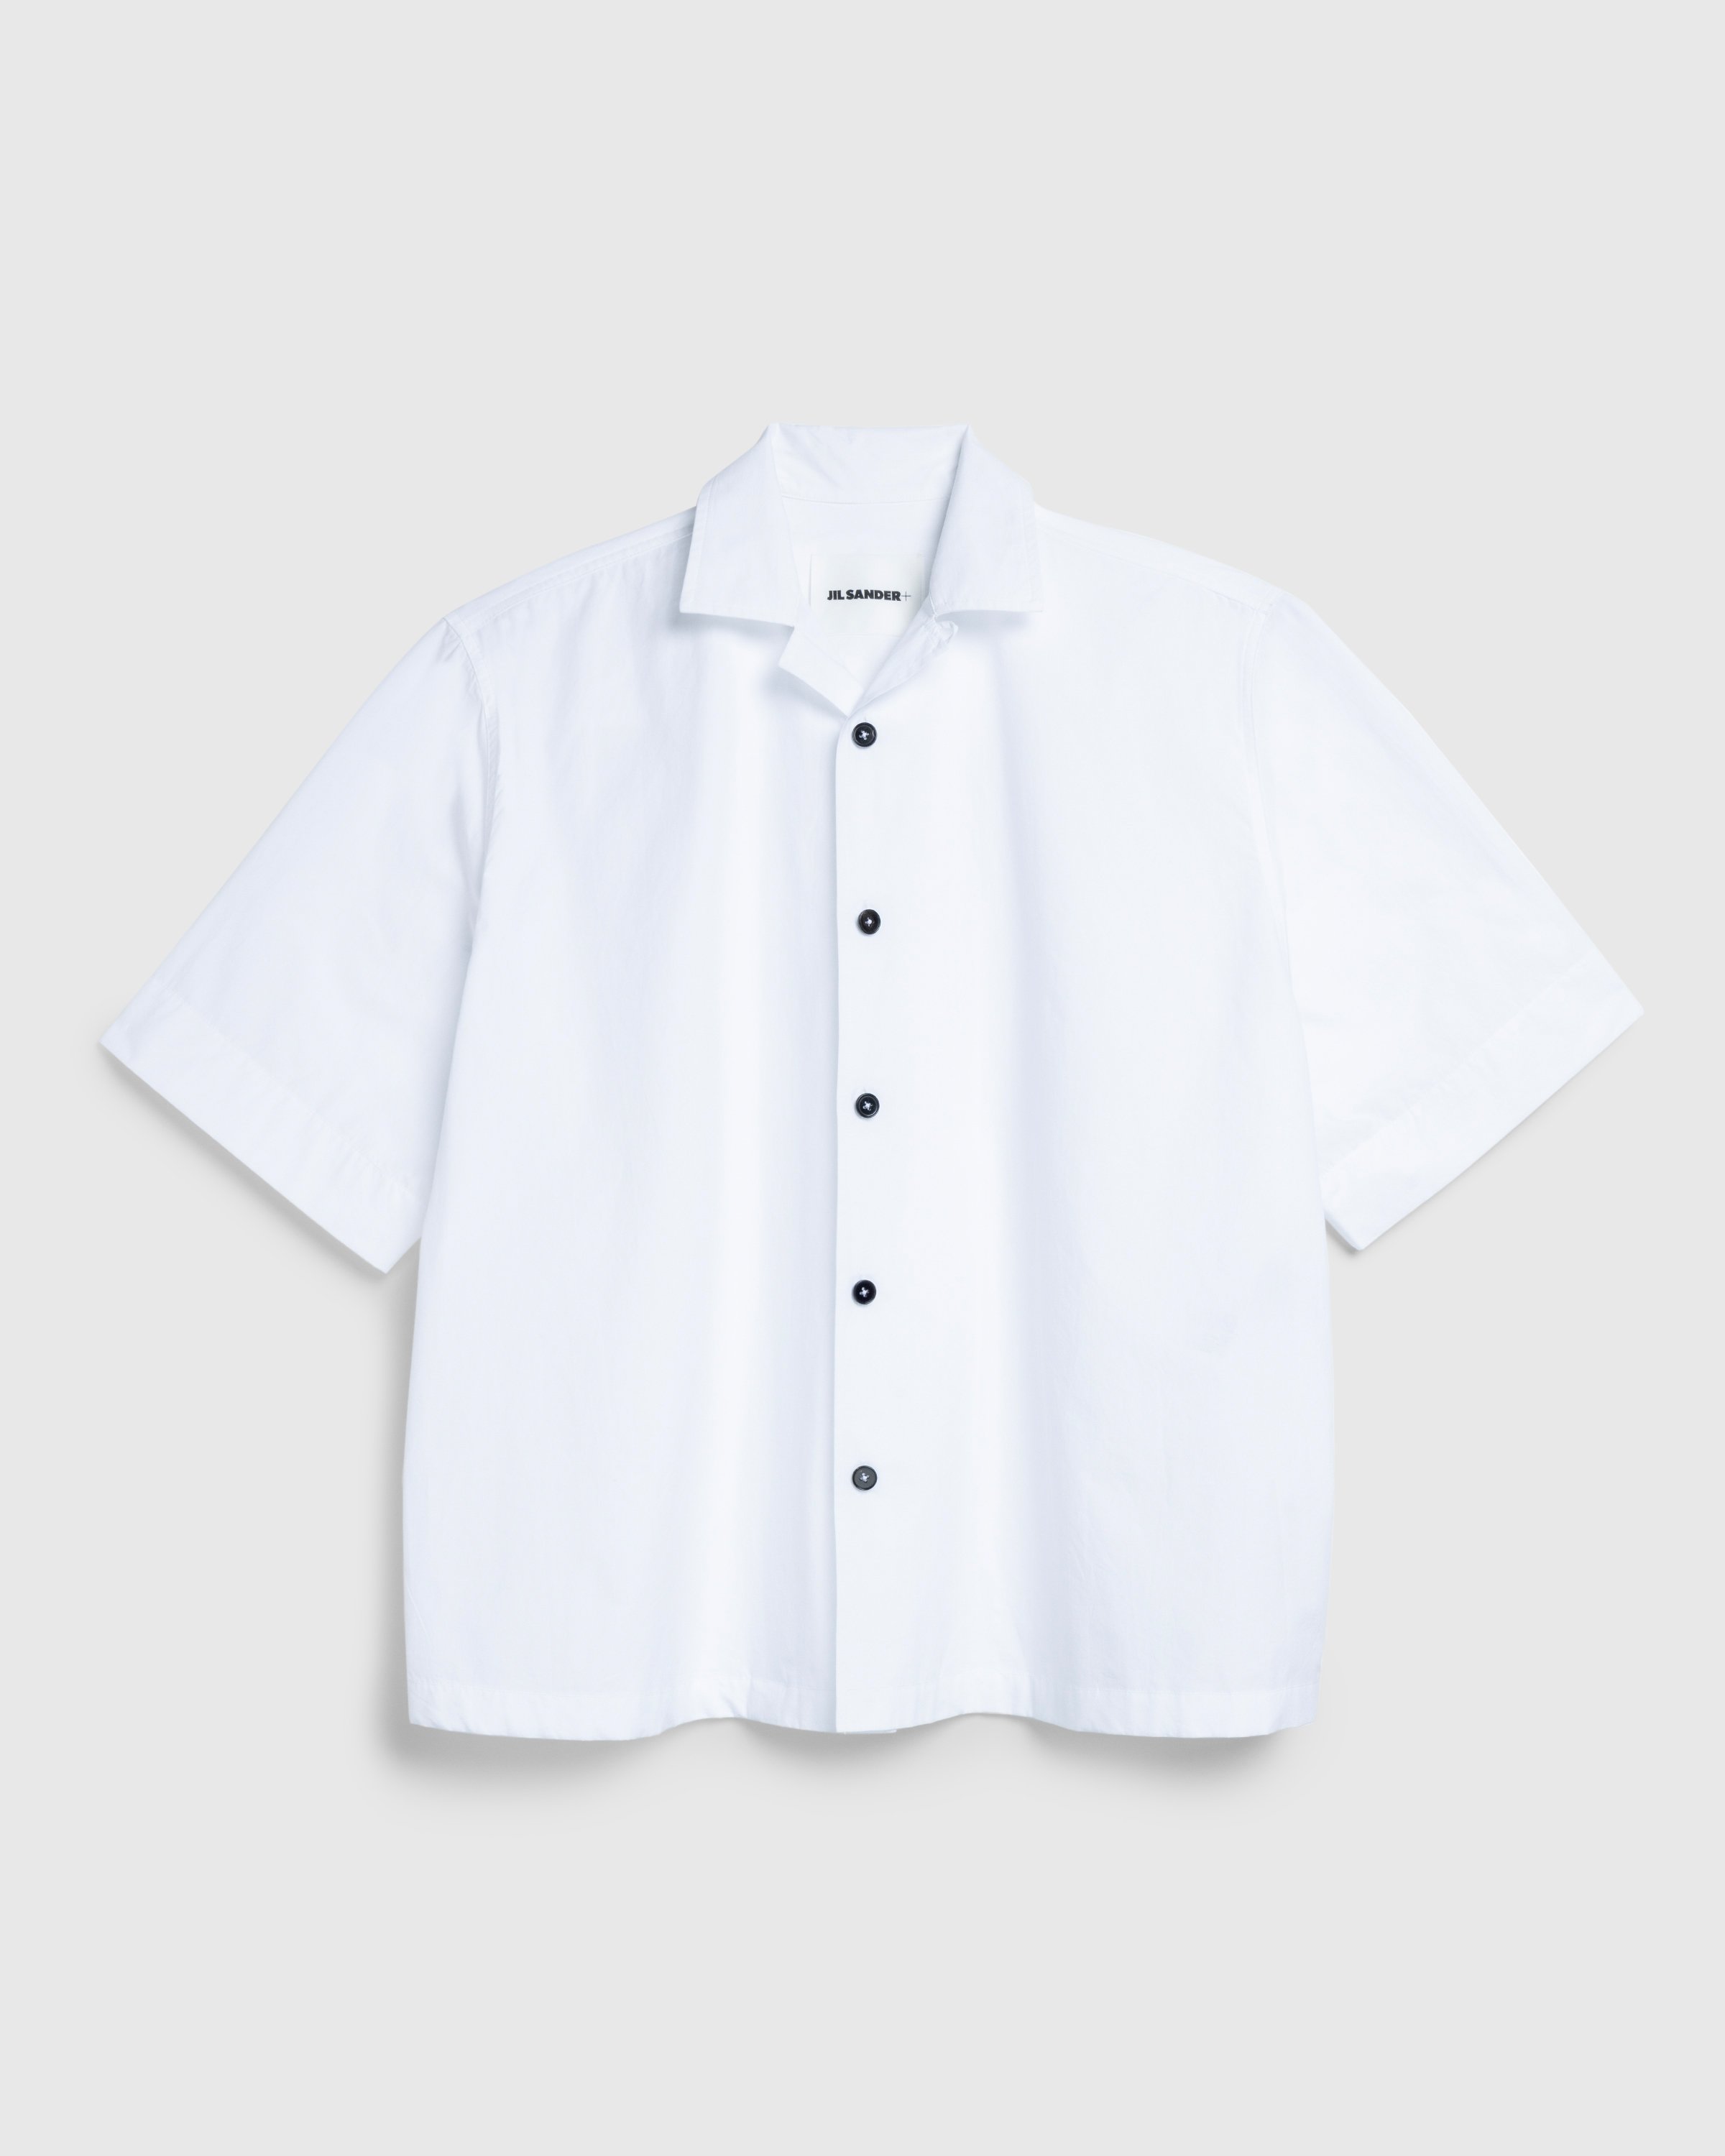 Jil Sander - Shirt 41 - Clothing - White - Image 1